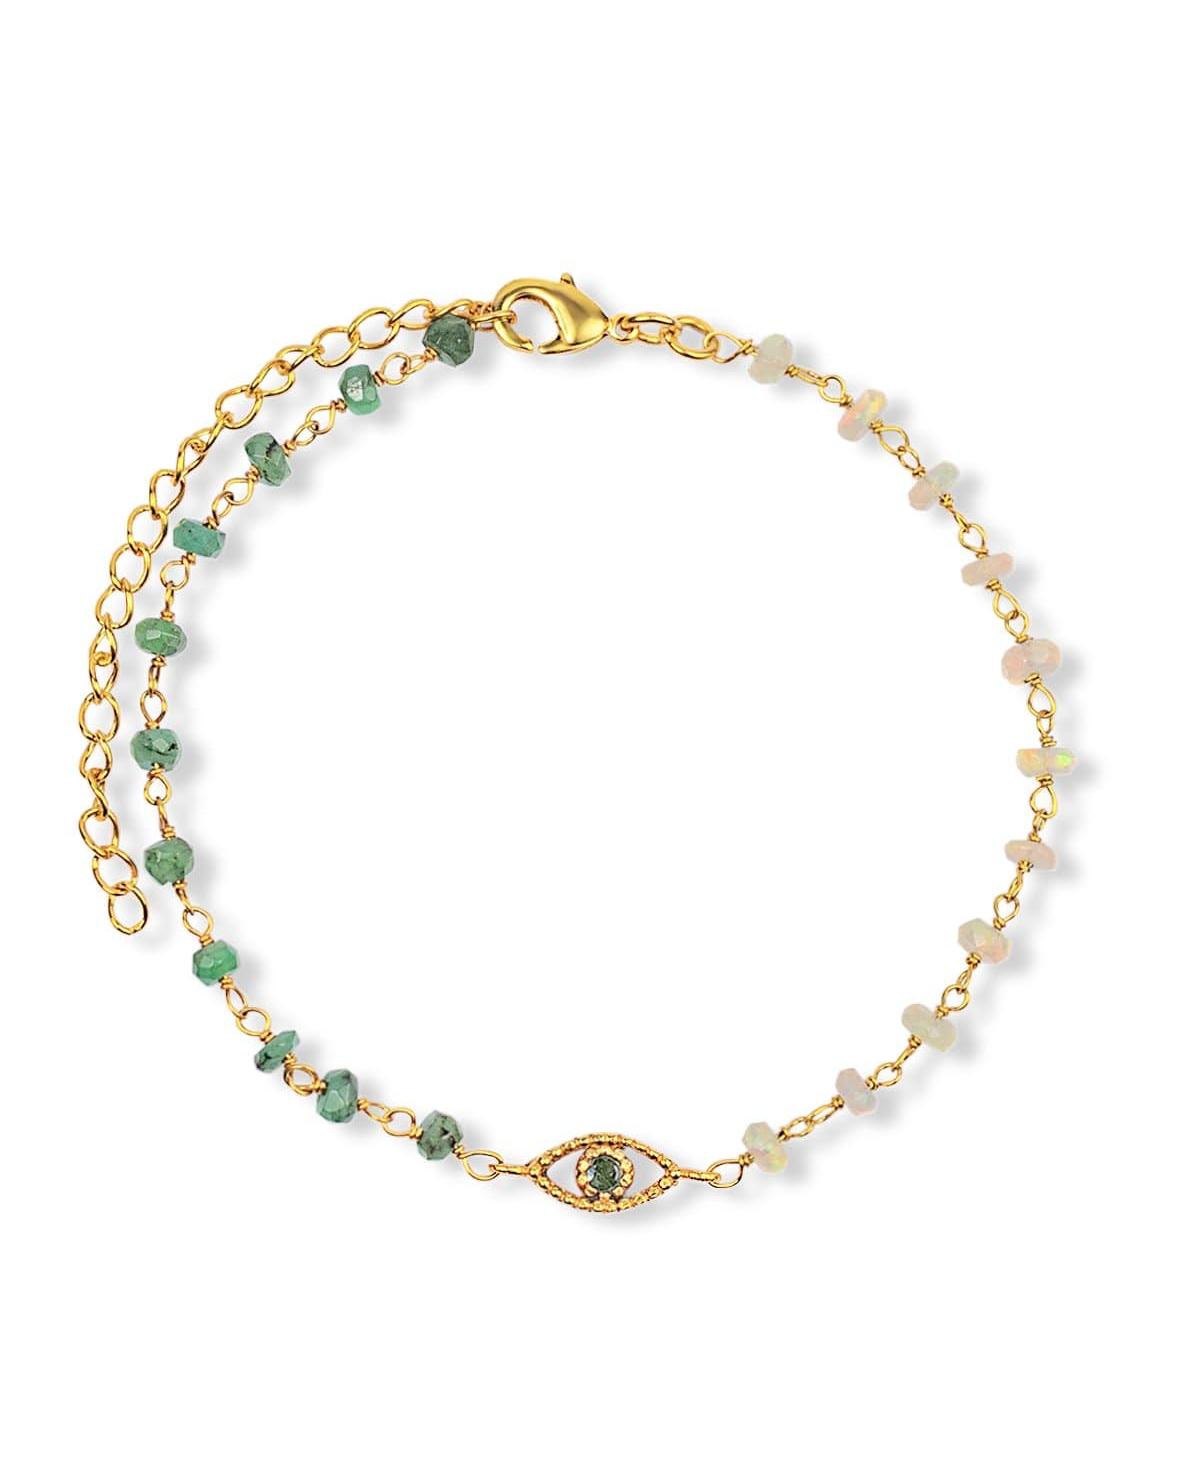 Soothing Oasis - Opal Emerald Evil Eye Charm Bracelet - Gold/green/white